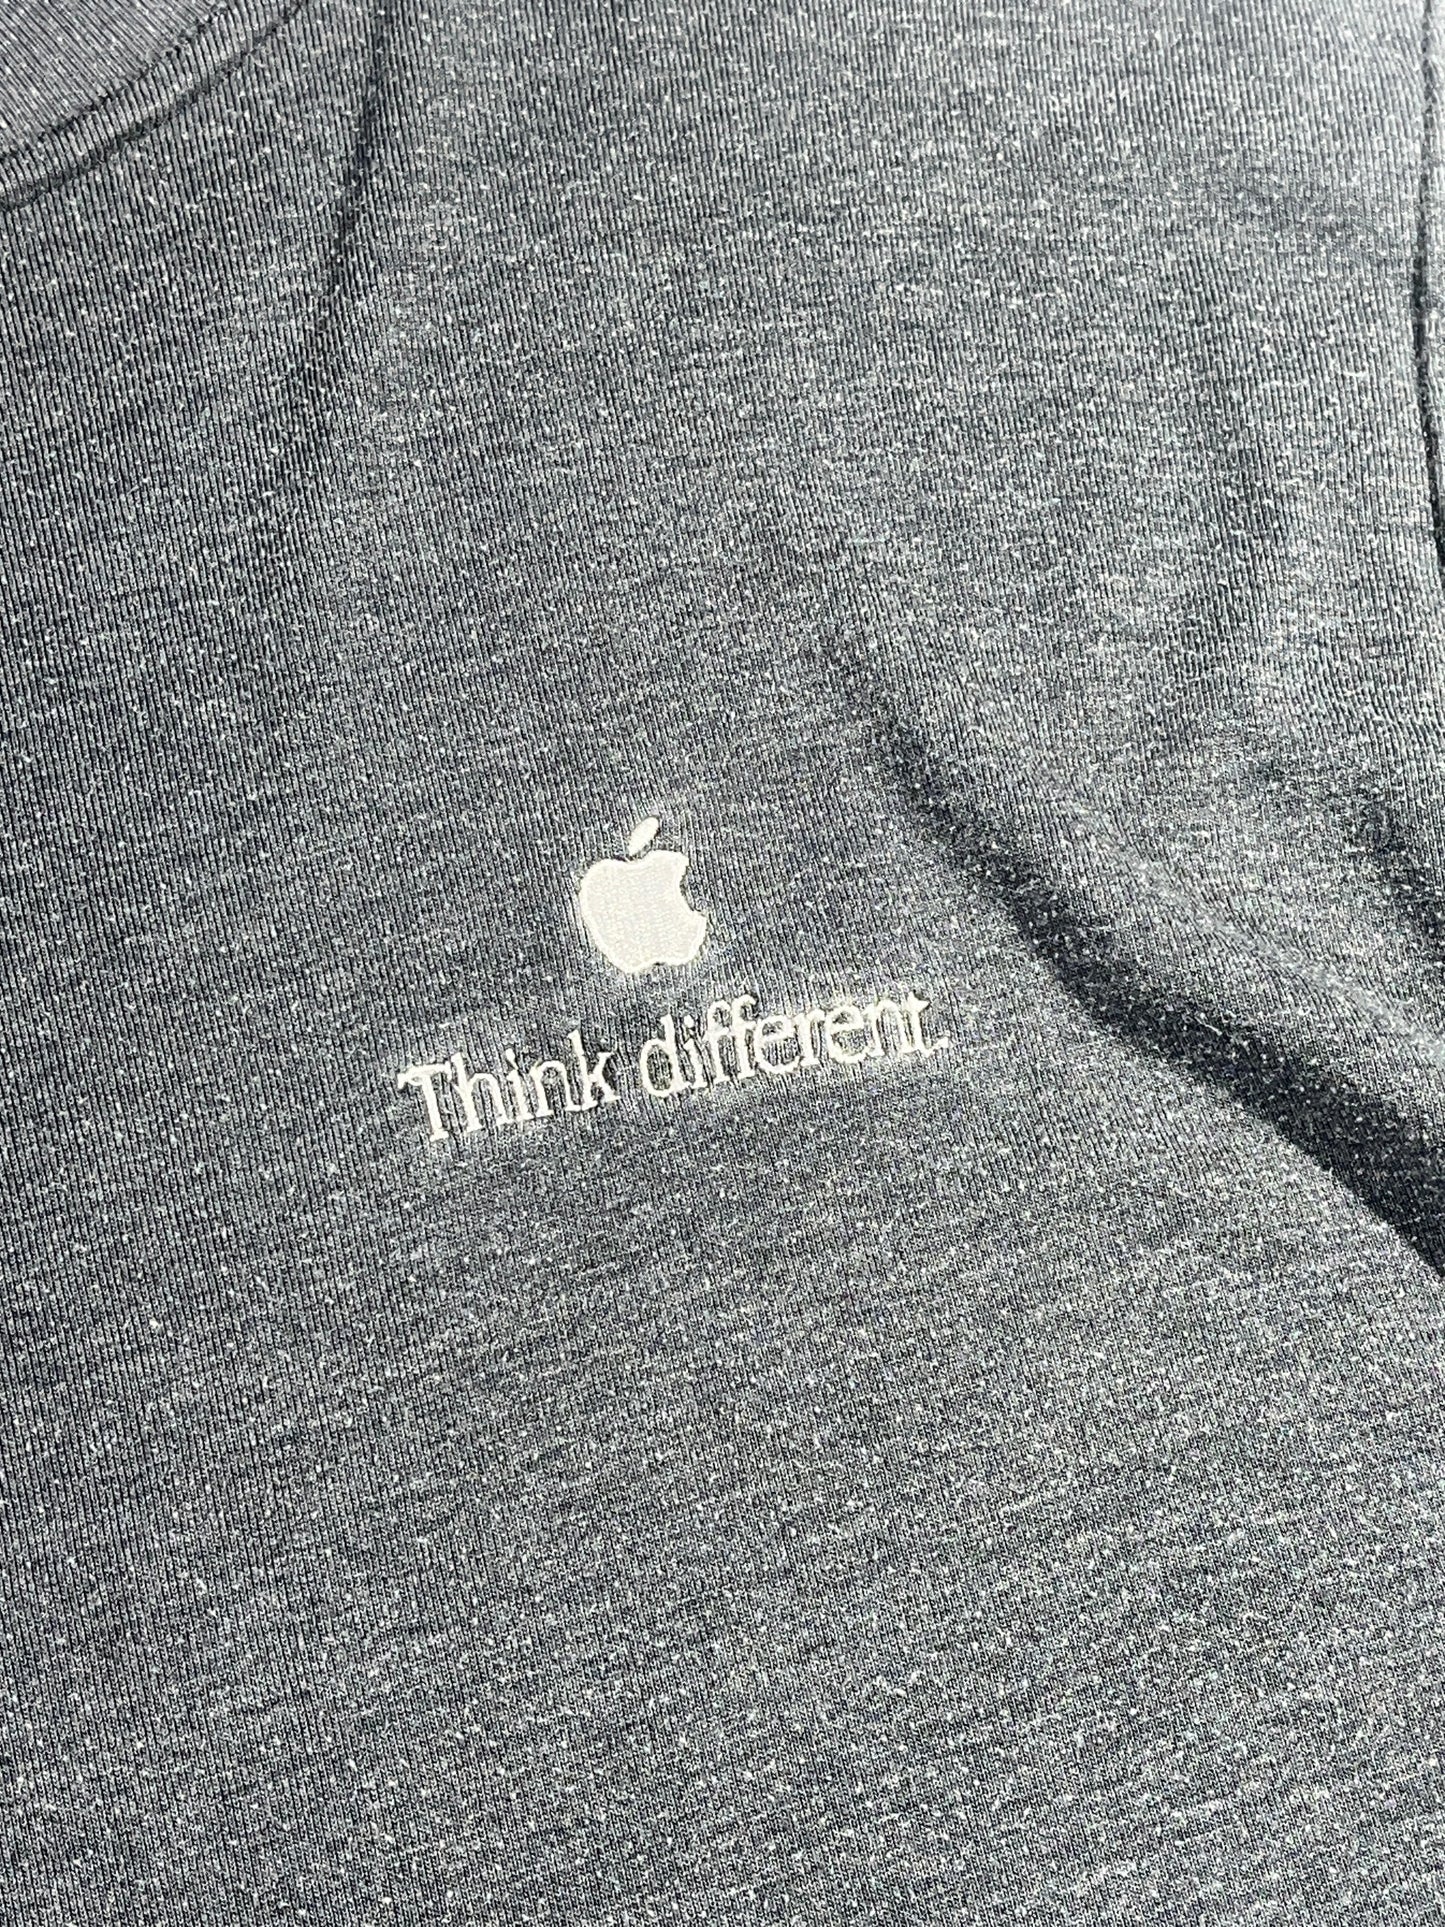 Vintage Apple T-Shirt Mac Think Different